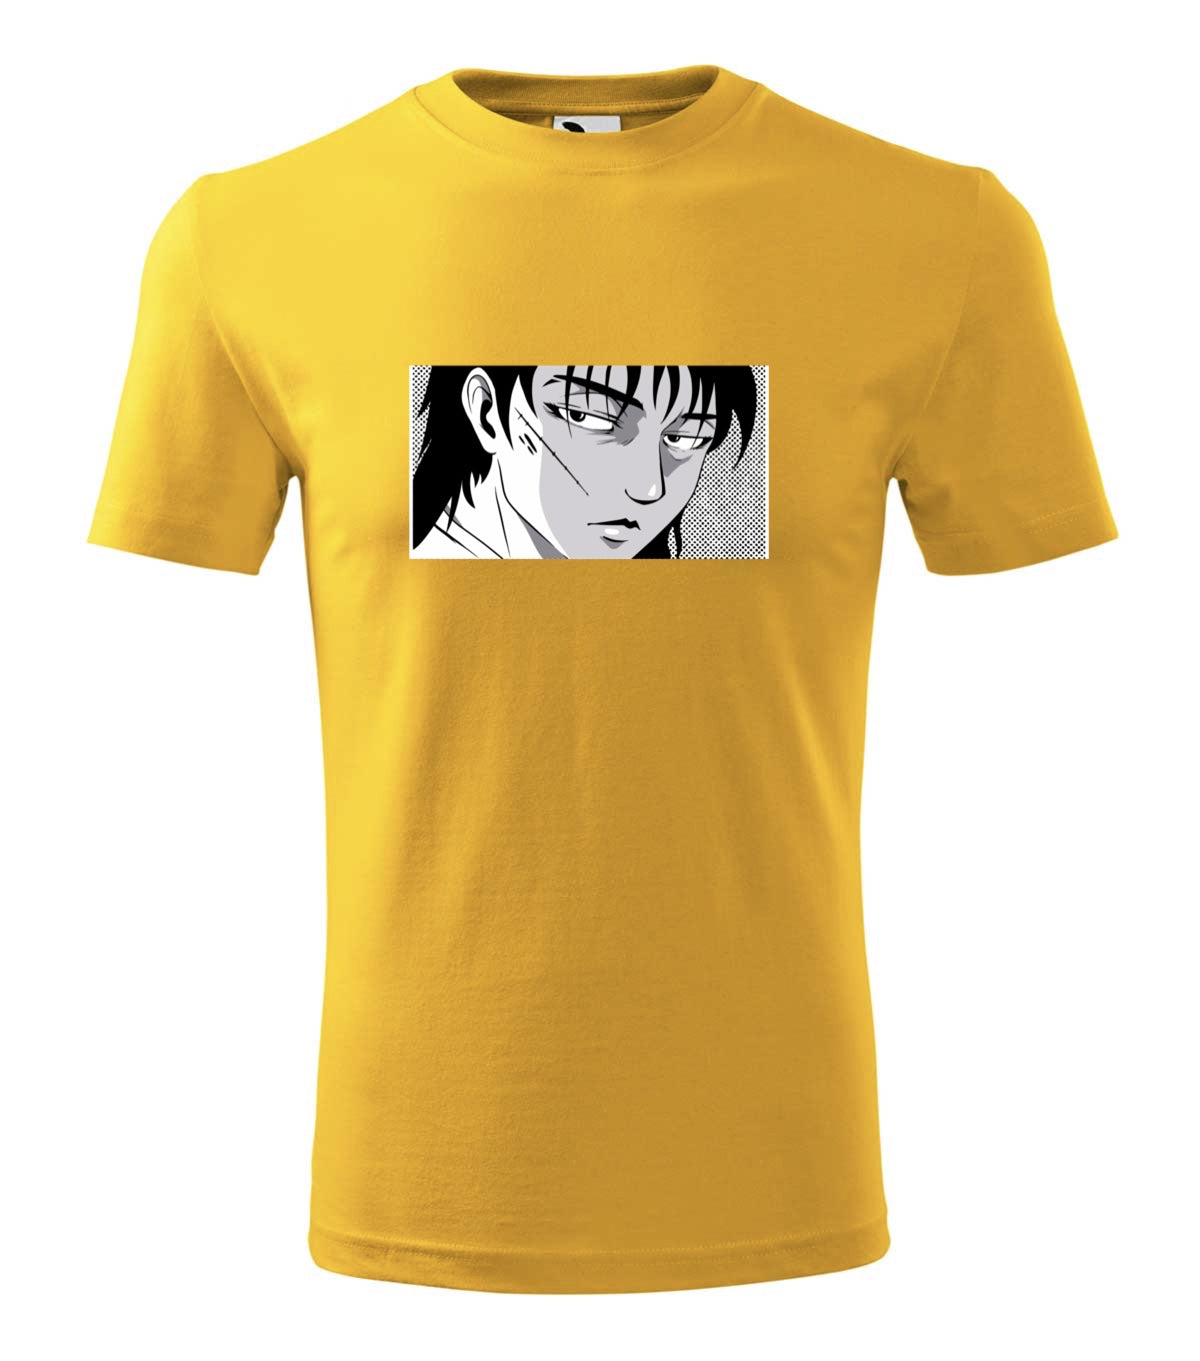 Anime boy férfi technikai póló